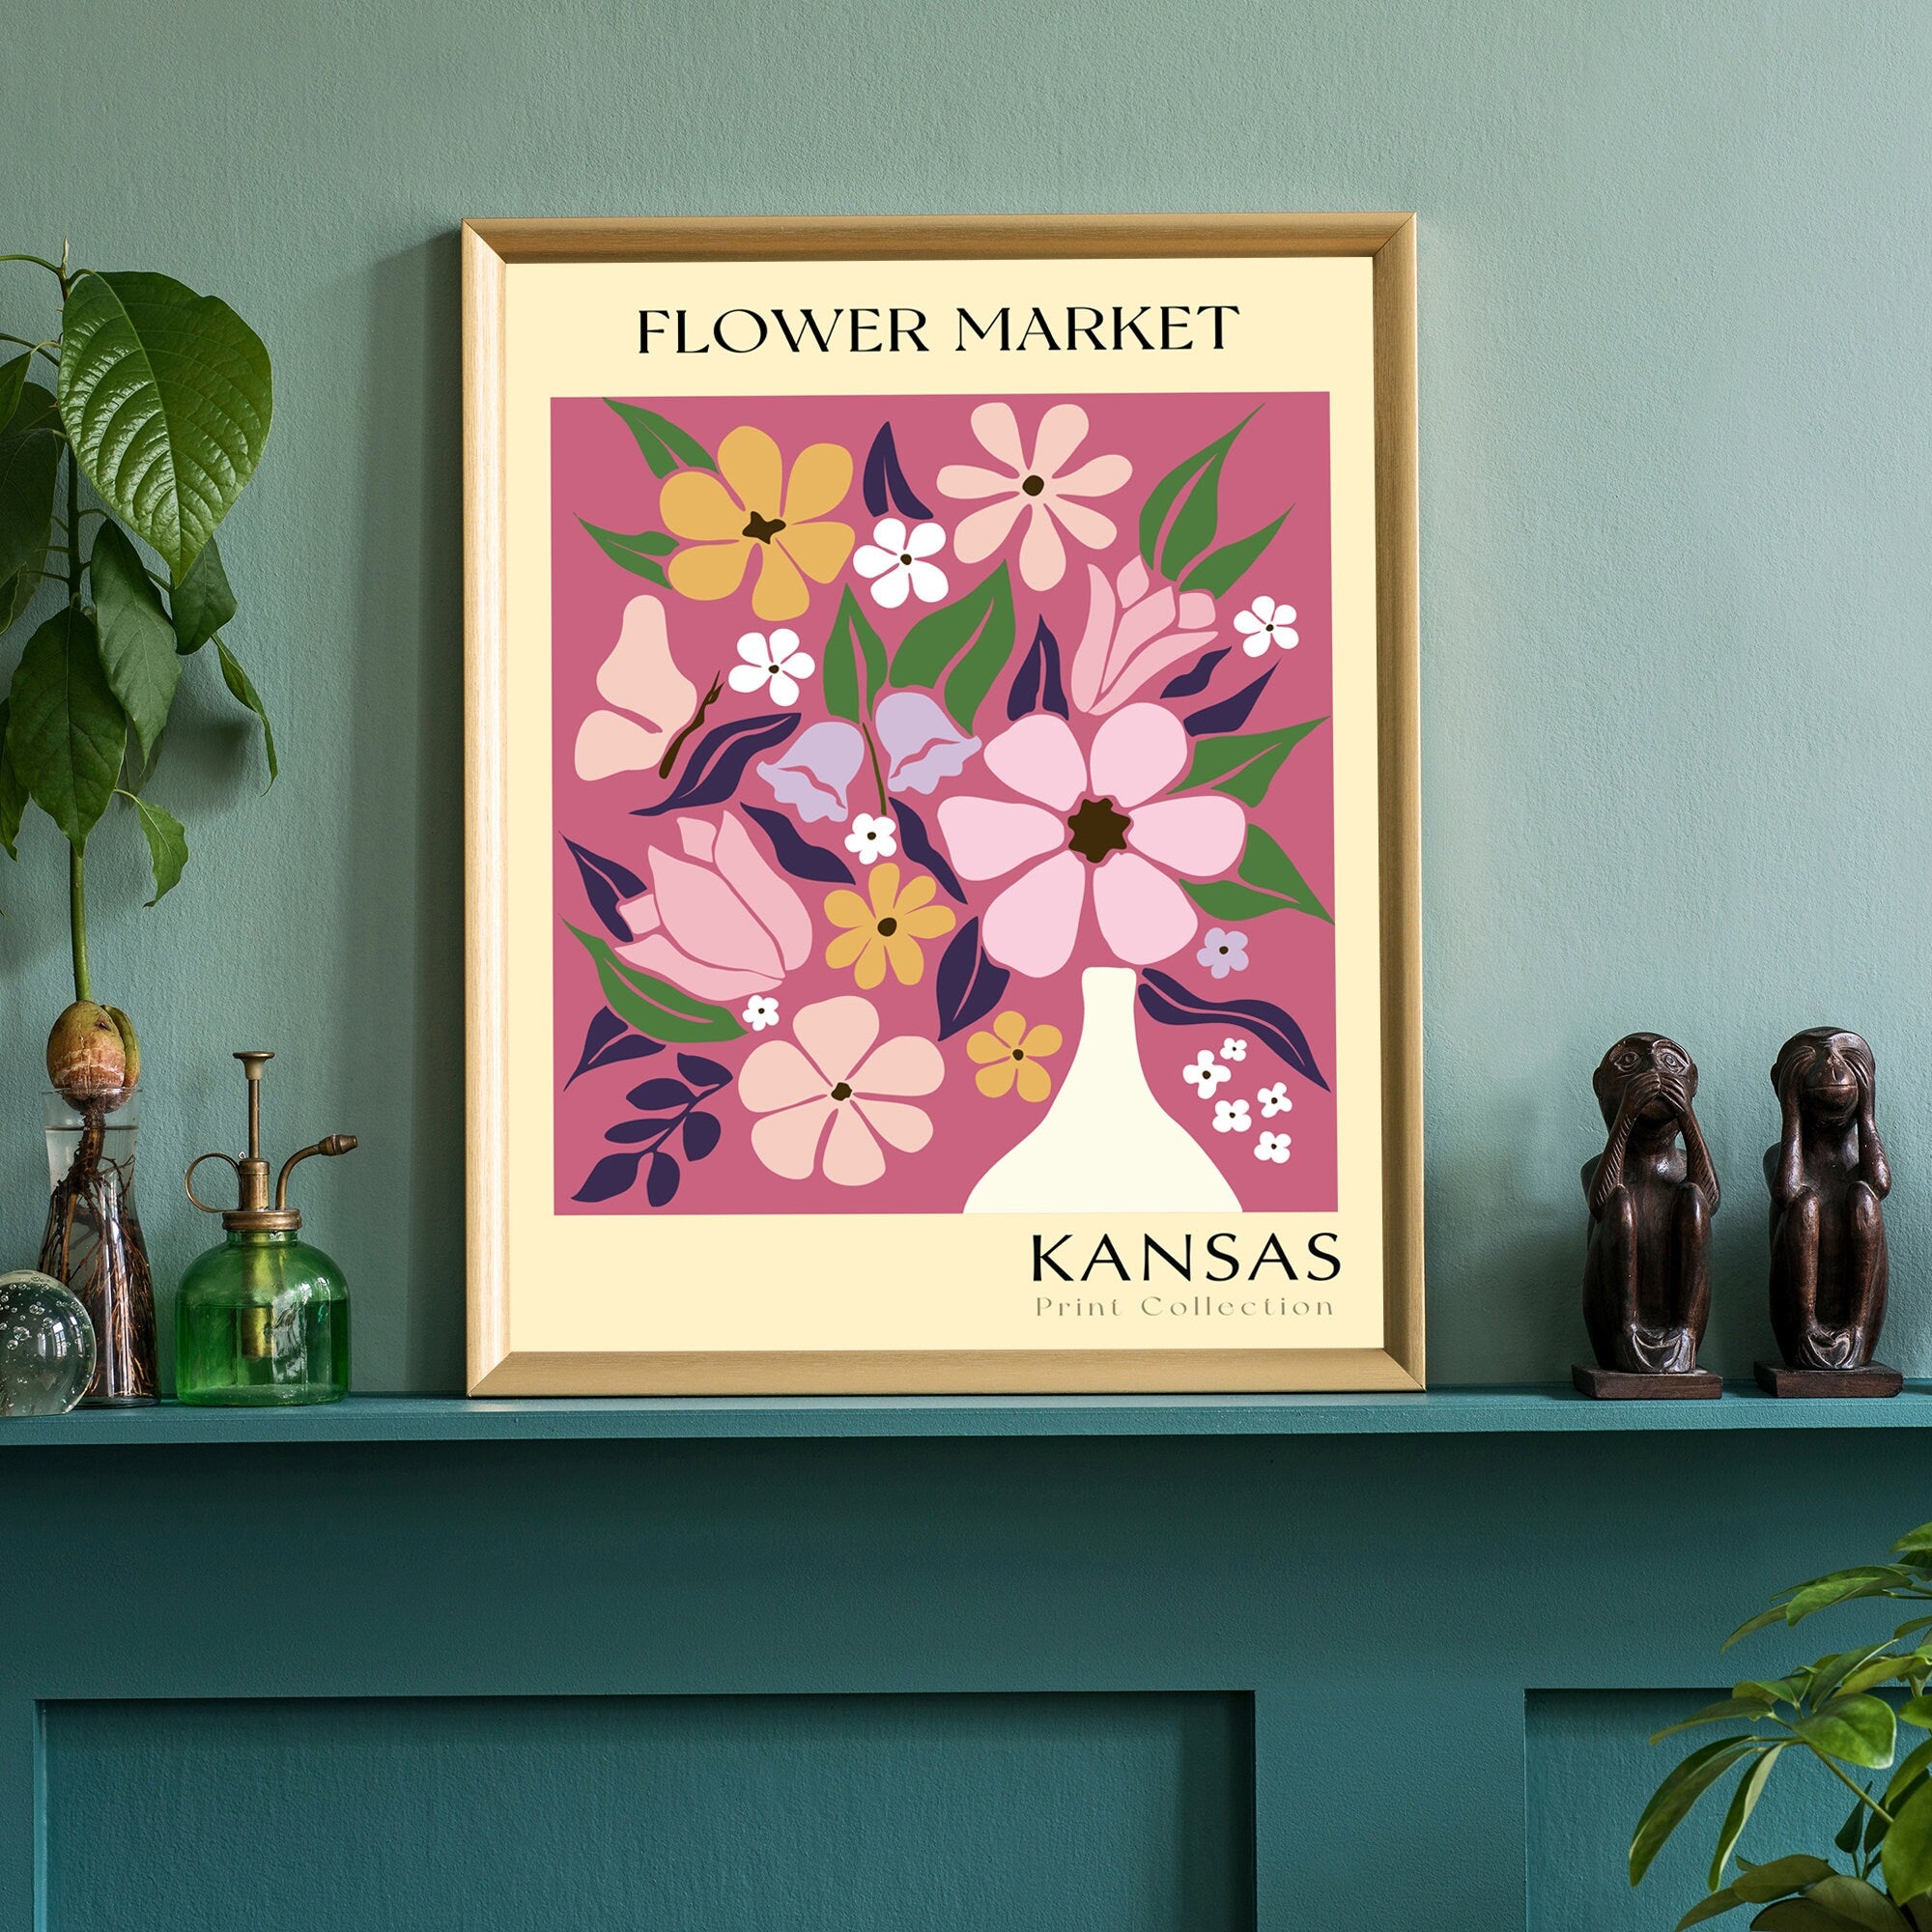 Kansas State flower print, USA states poster, Kansas flower market poster, Botanical posters, Nature poster artwork, Boho floral wall art